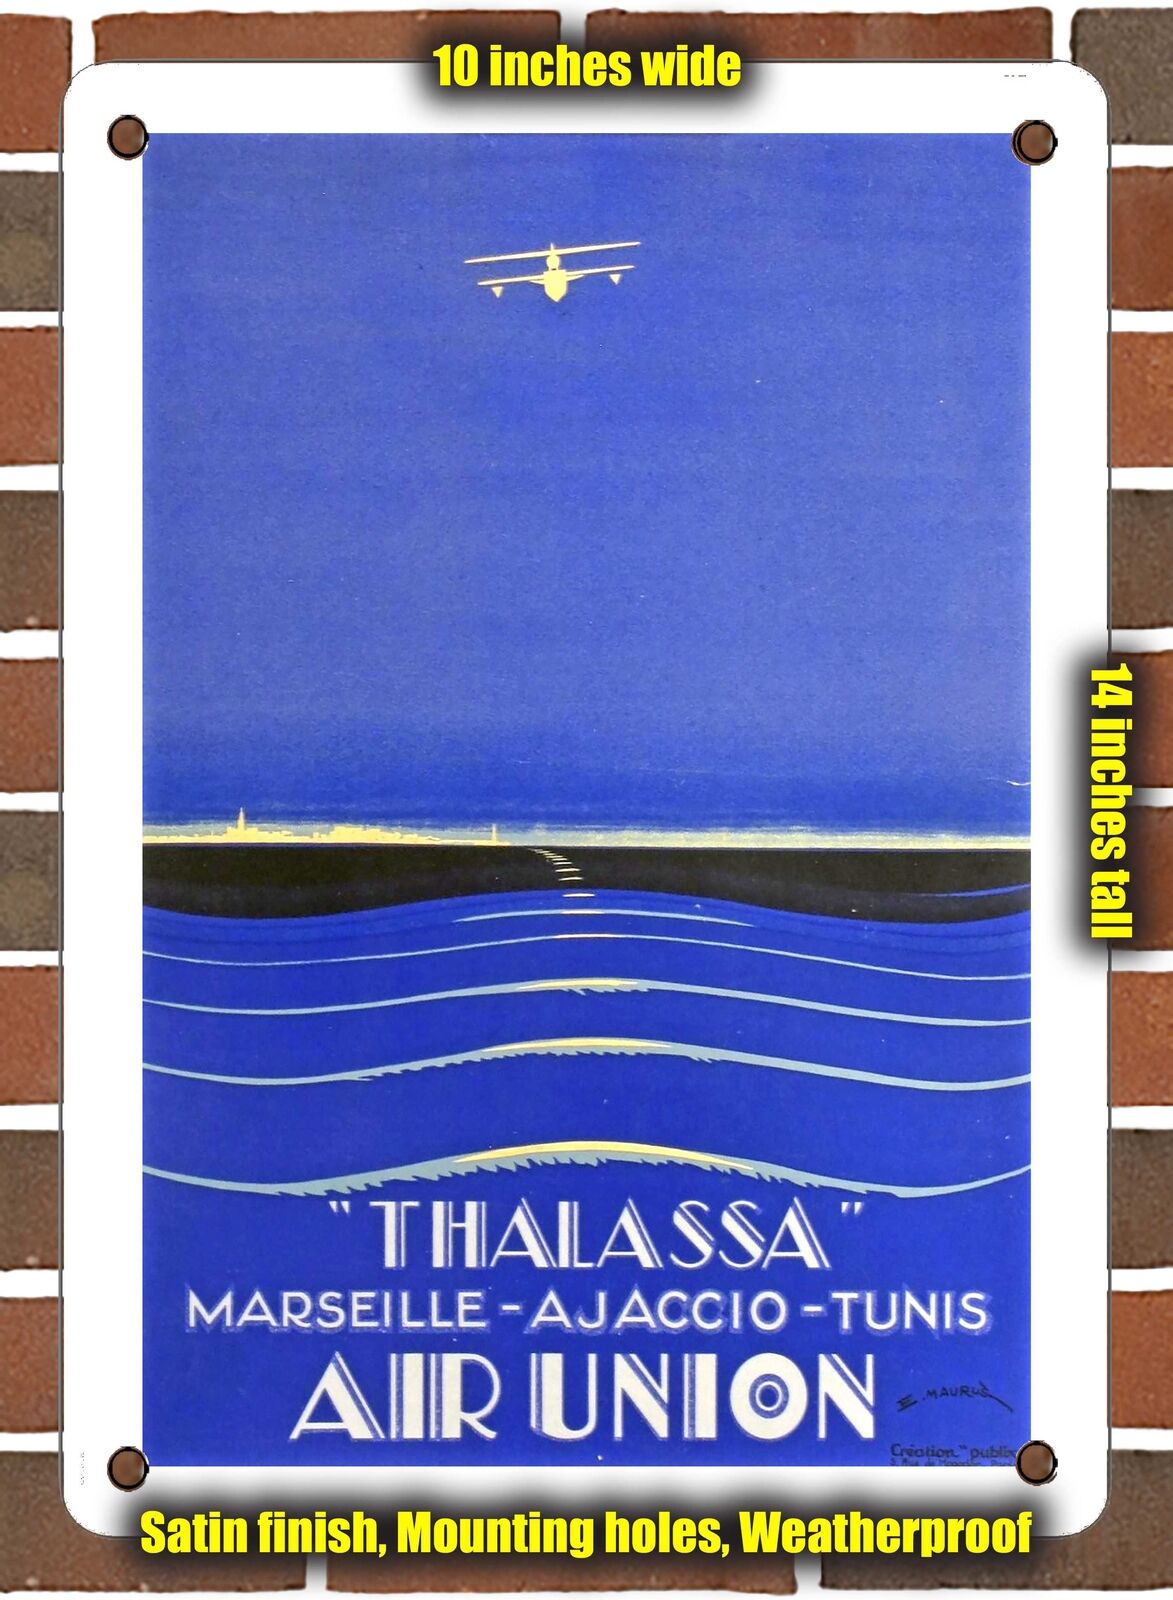 METAL SIGN - 1929 Thalassa: Marseille, Ajaccio, Tunis Air Union - 10x14 Inches